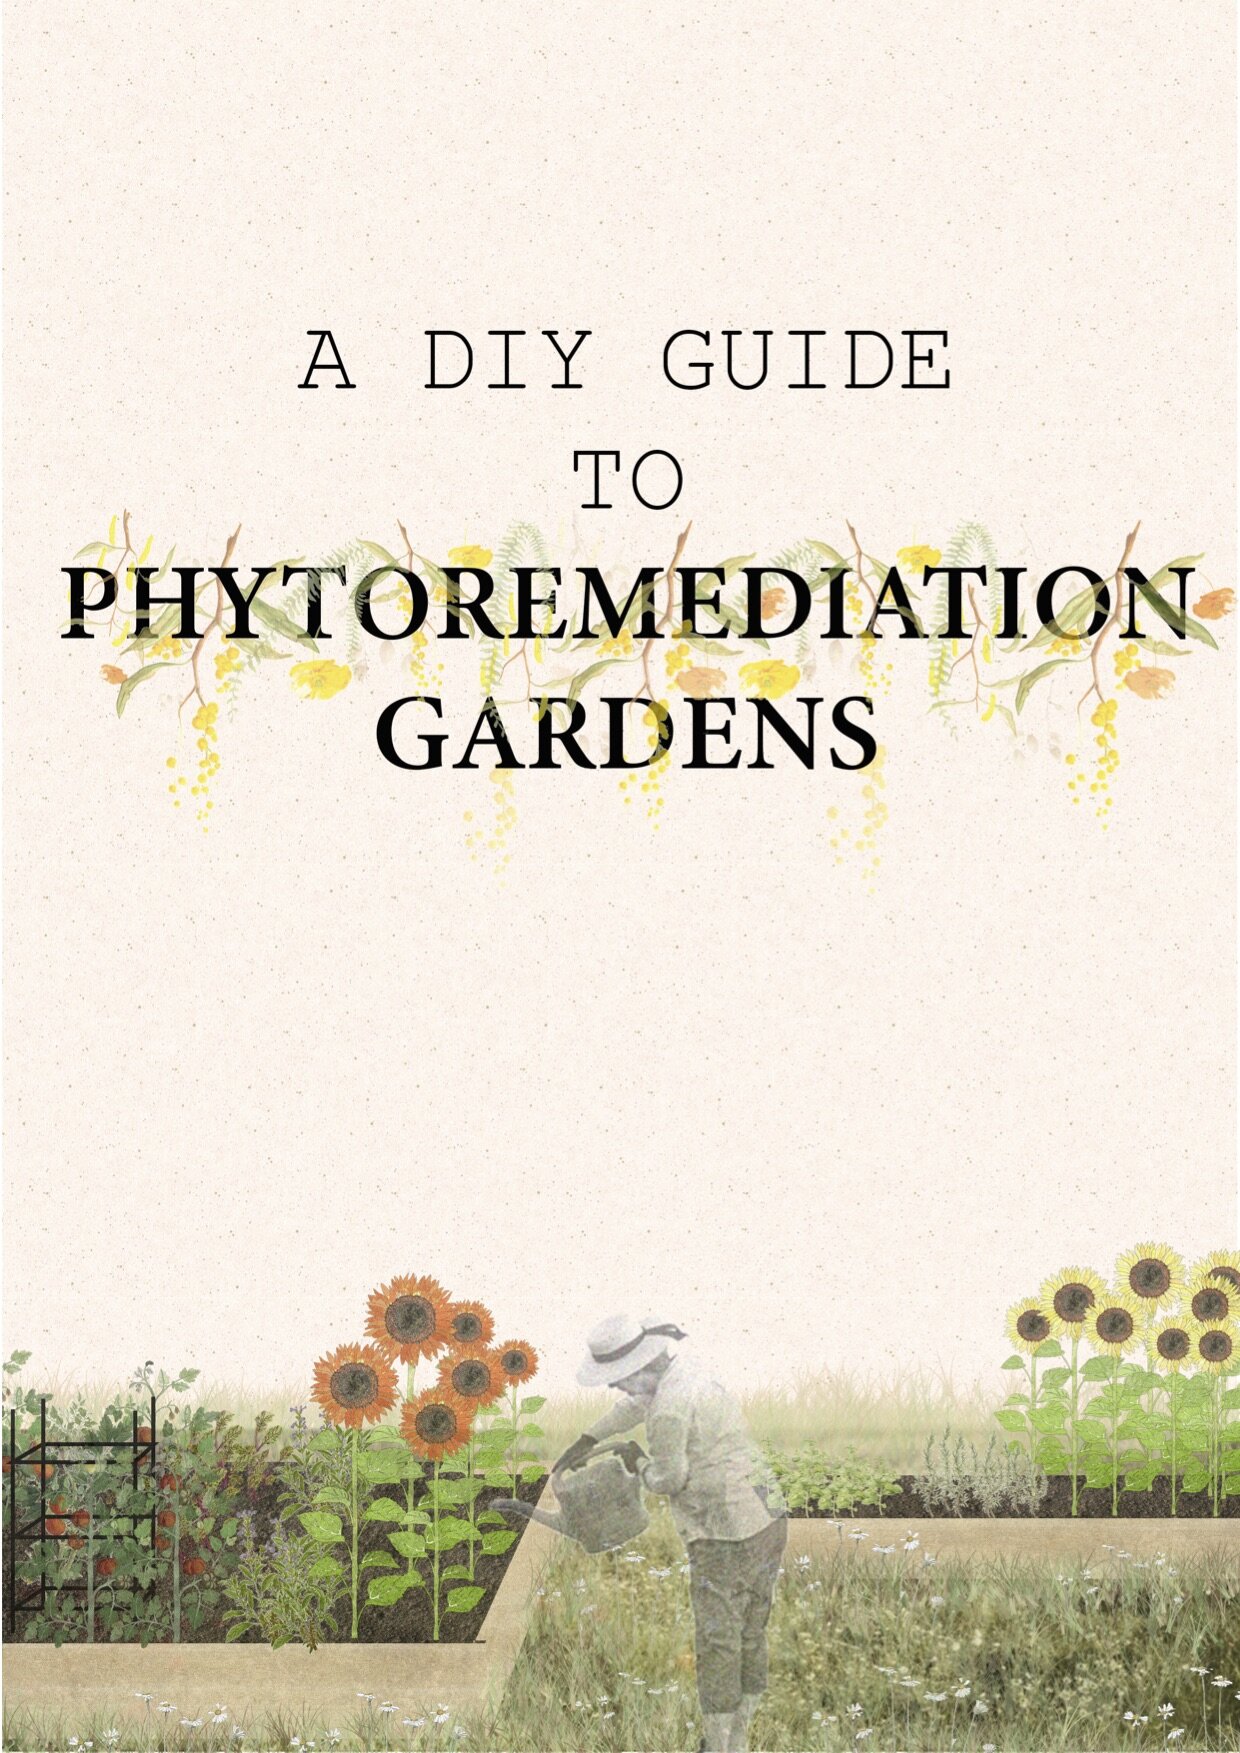 A-1DIY-Guide-To-Phytoremediation-Gardens-Regimes-Of-Care 2.jpg